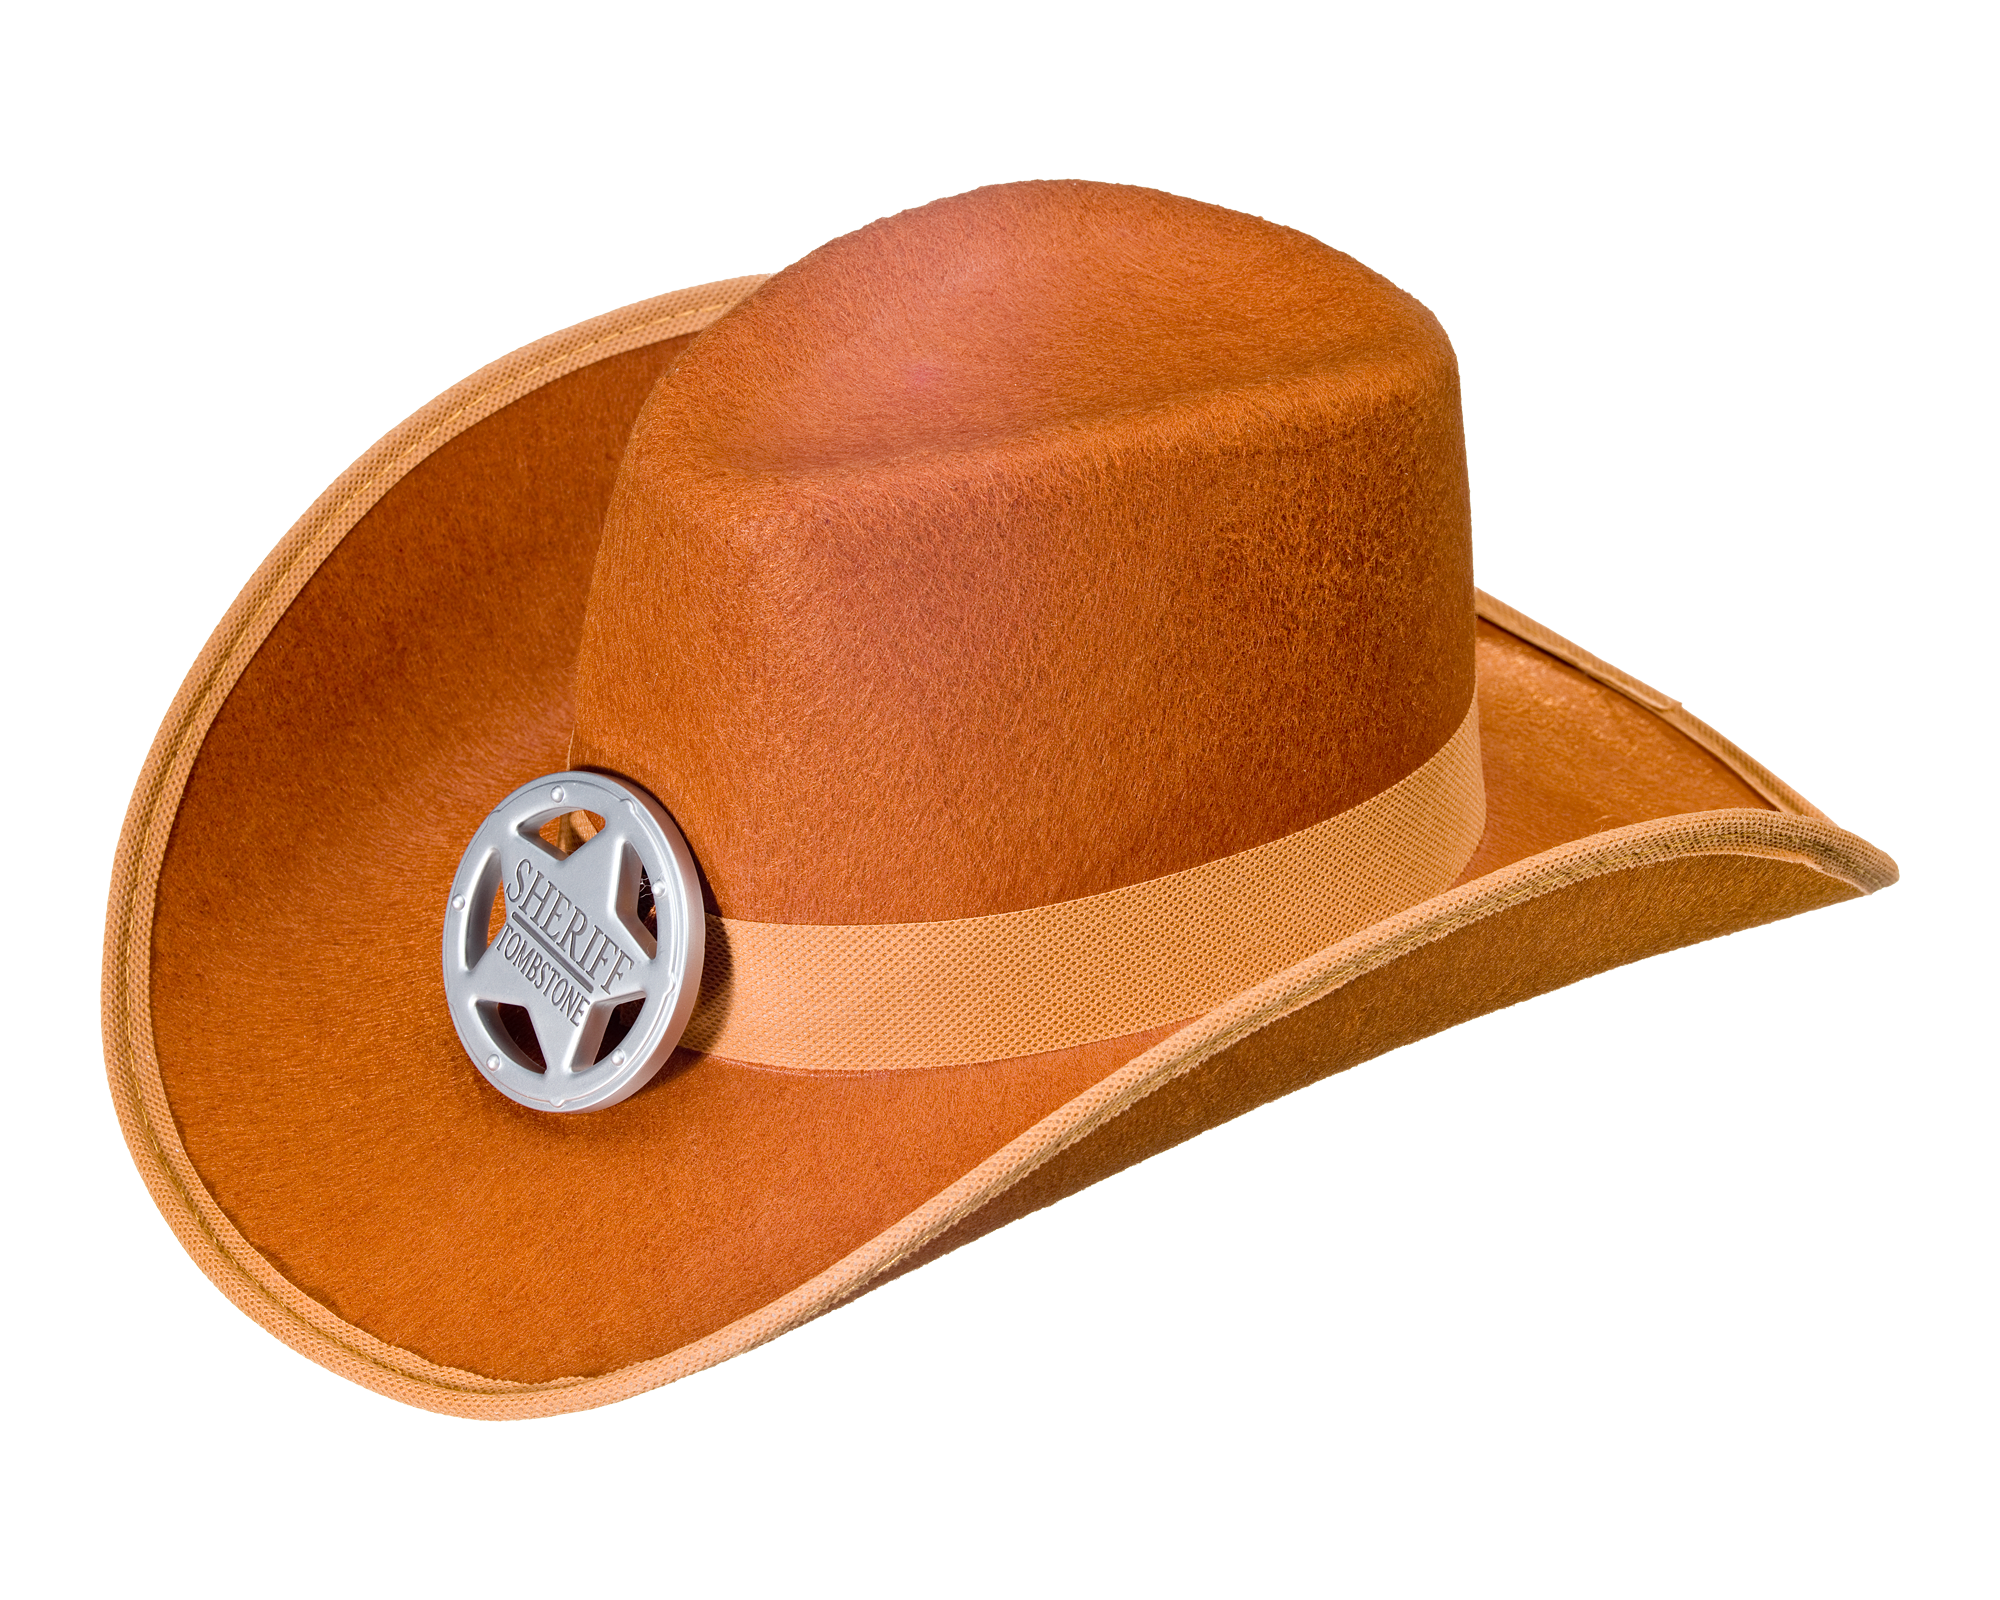 Kids Cowboy Hat by Hidalgo Hat Company